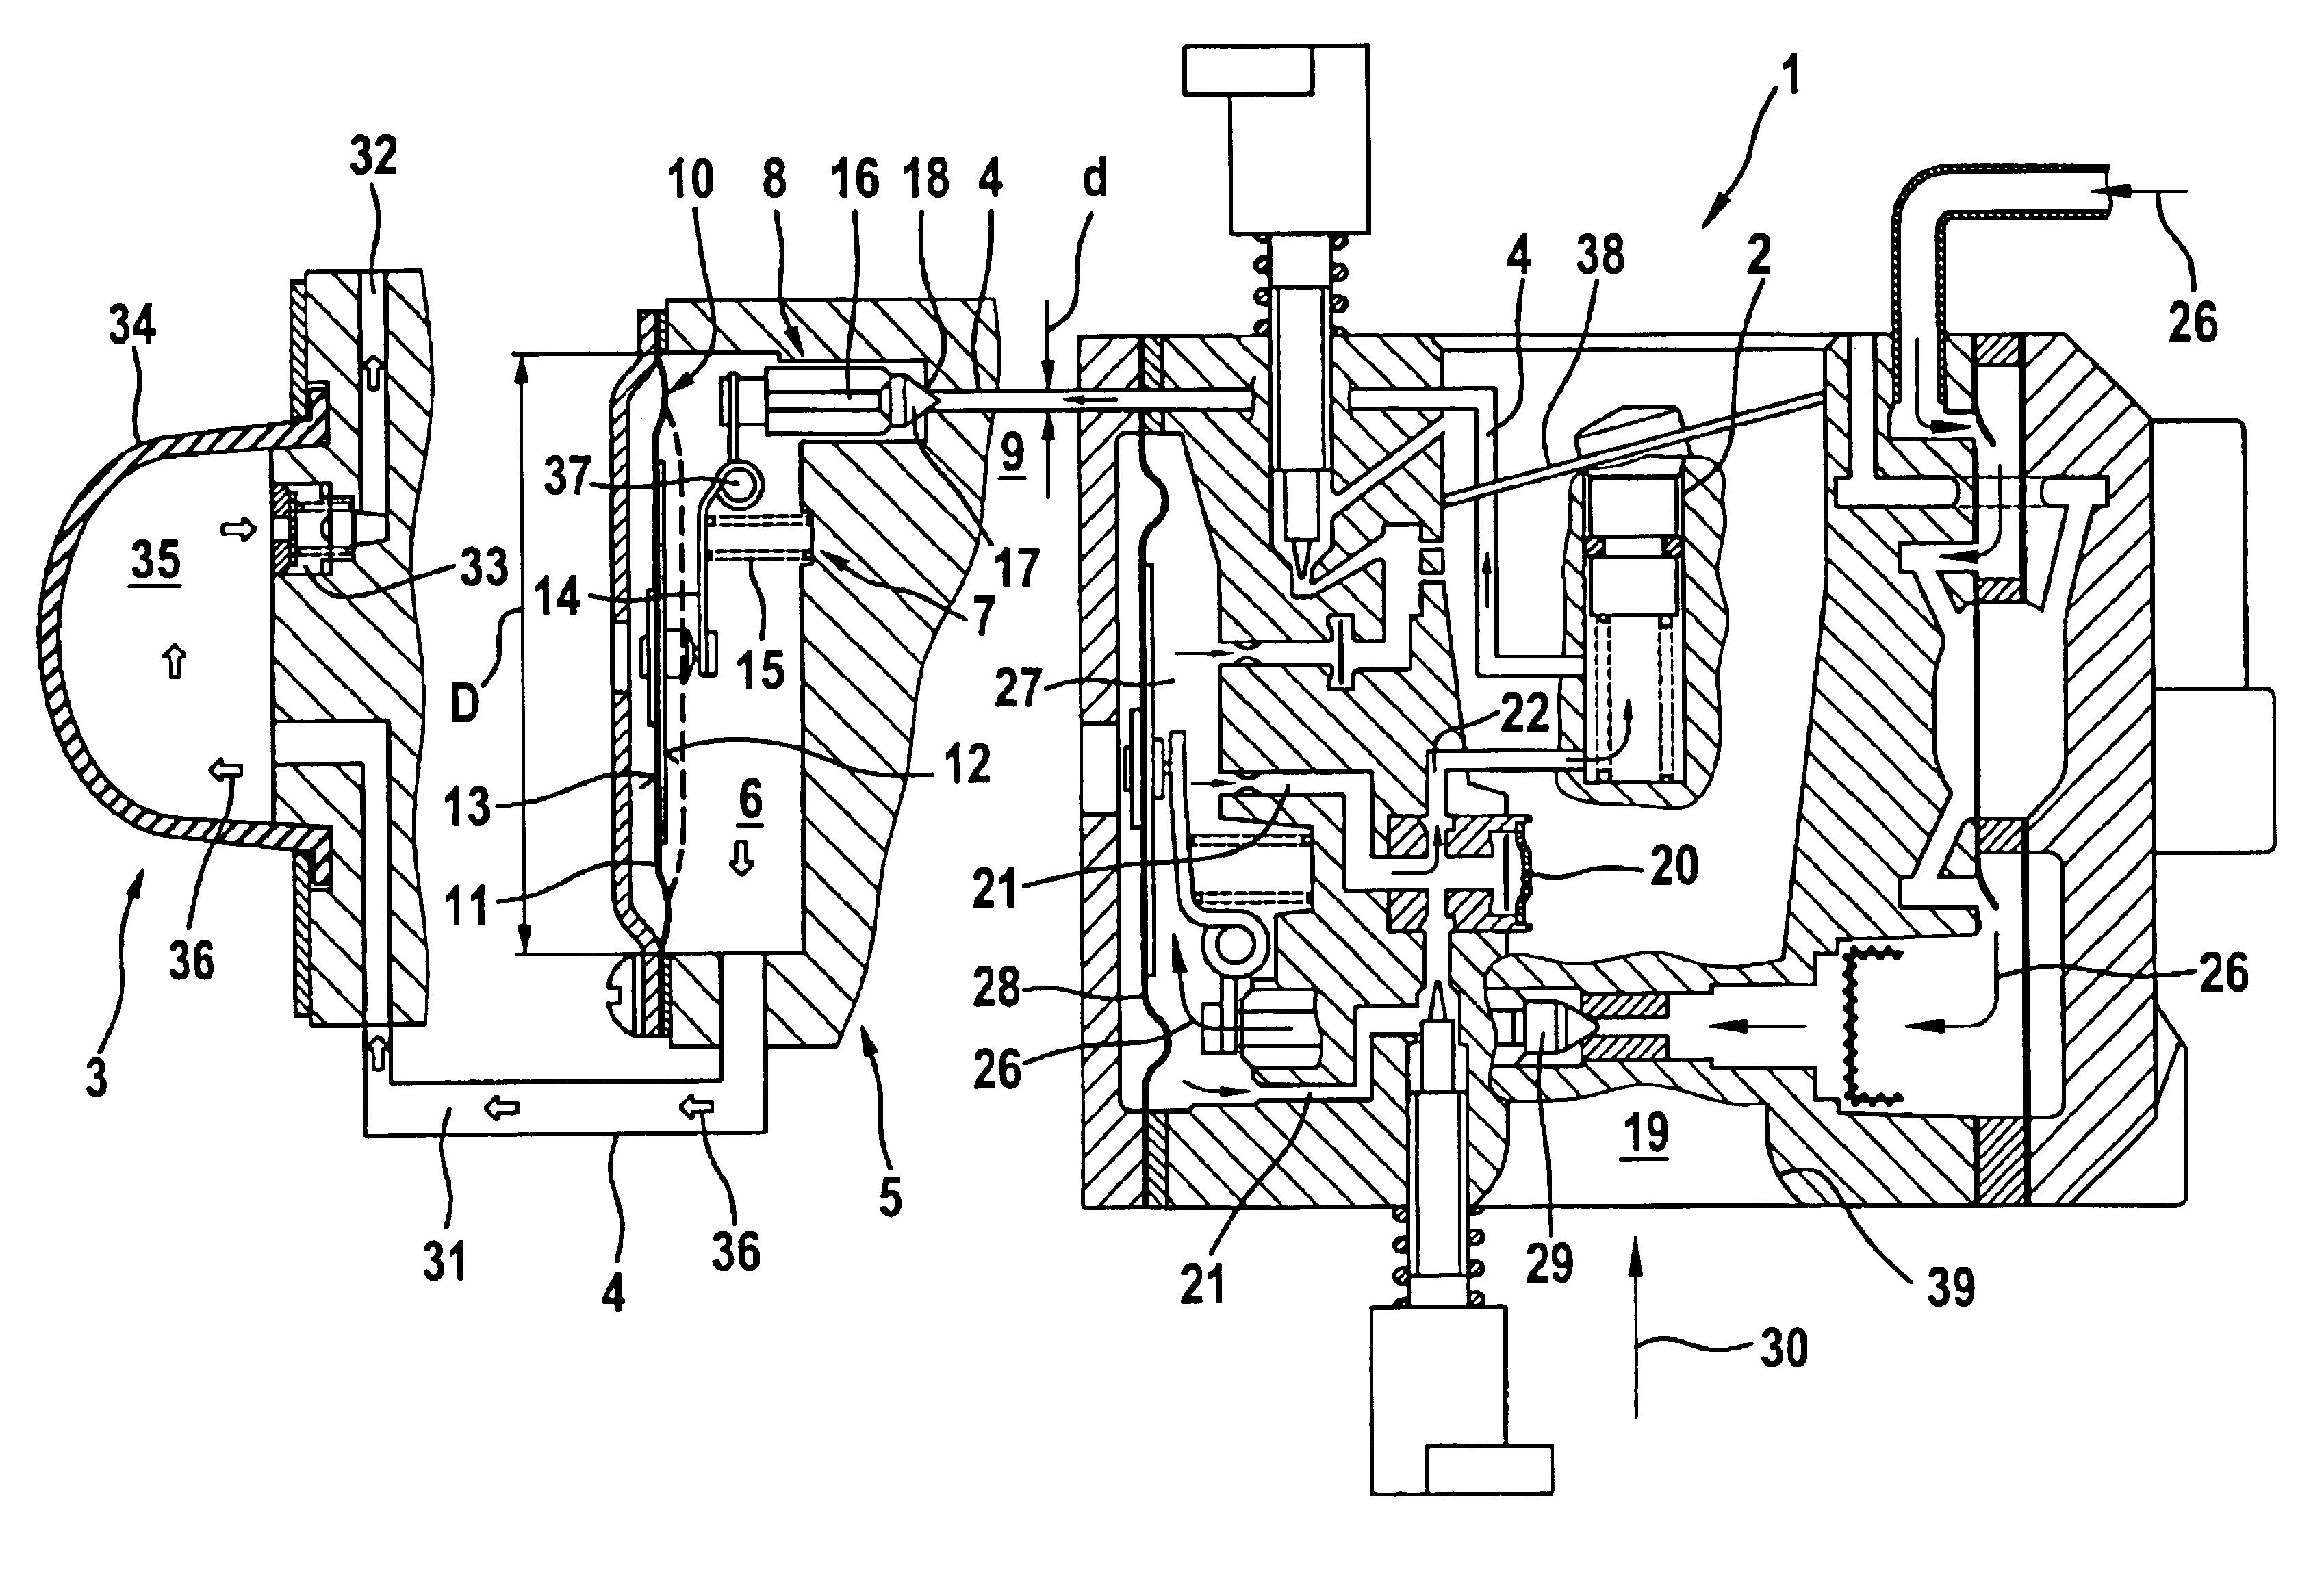 Carburetor arrangement of a portable handheld work apparatus